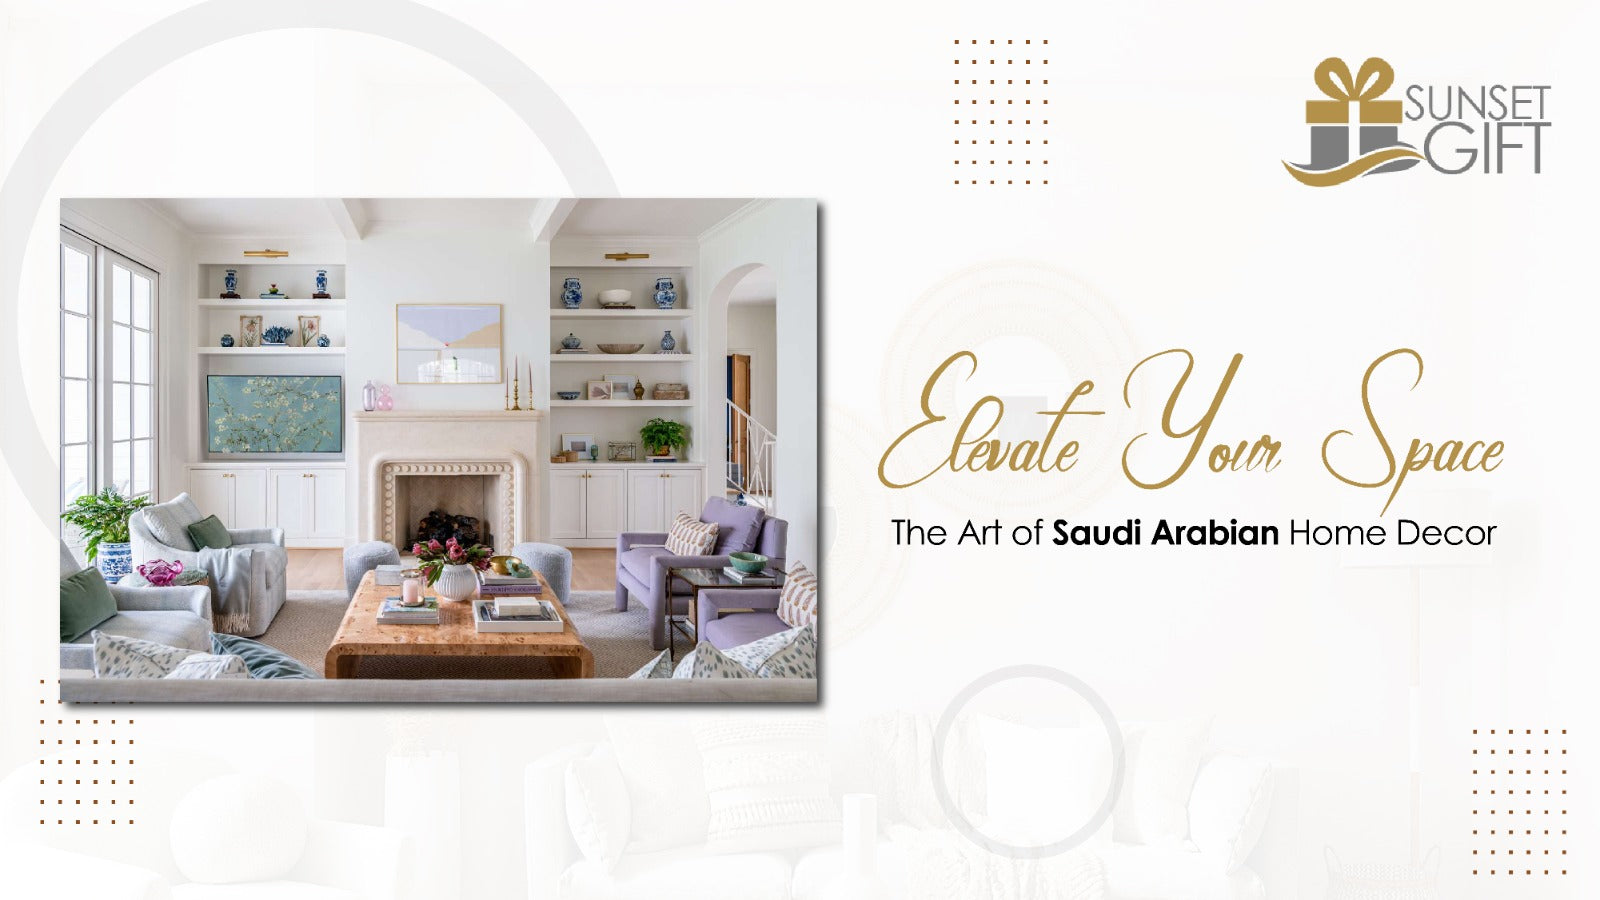 Elevate Your Space: The Art of Saudi Arabian Home Decor